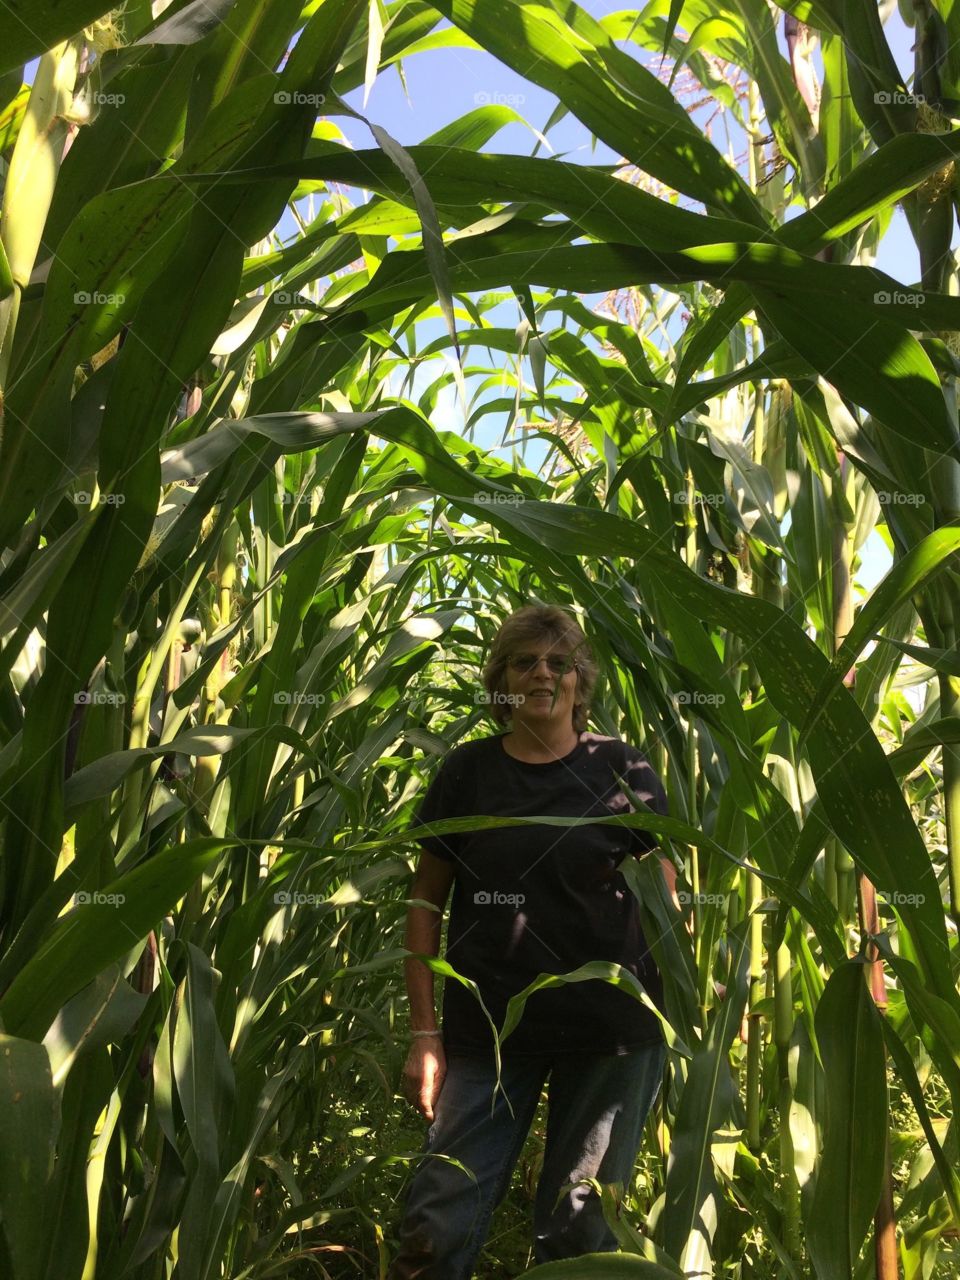 Standing in a field of corn